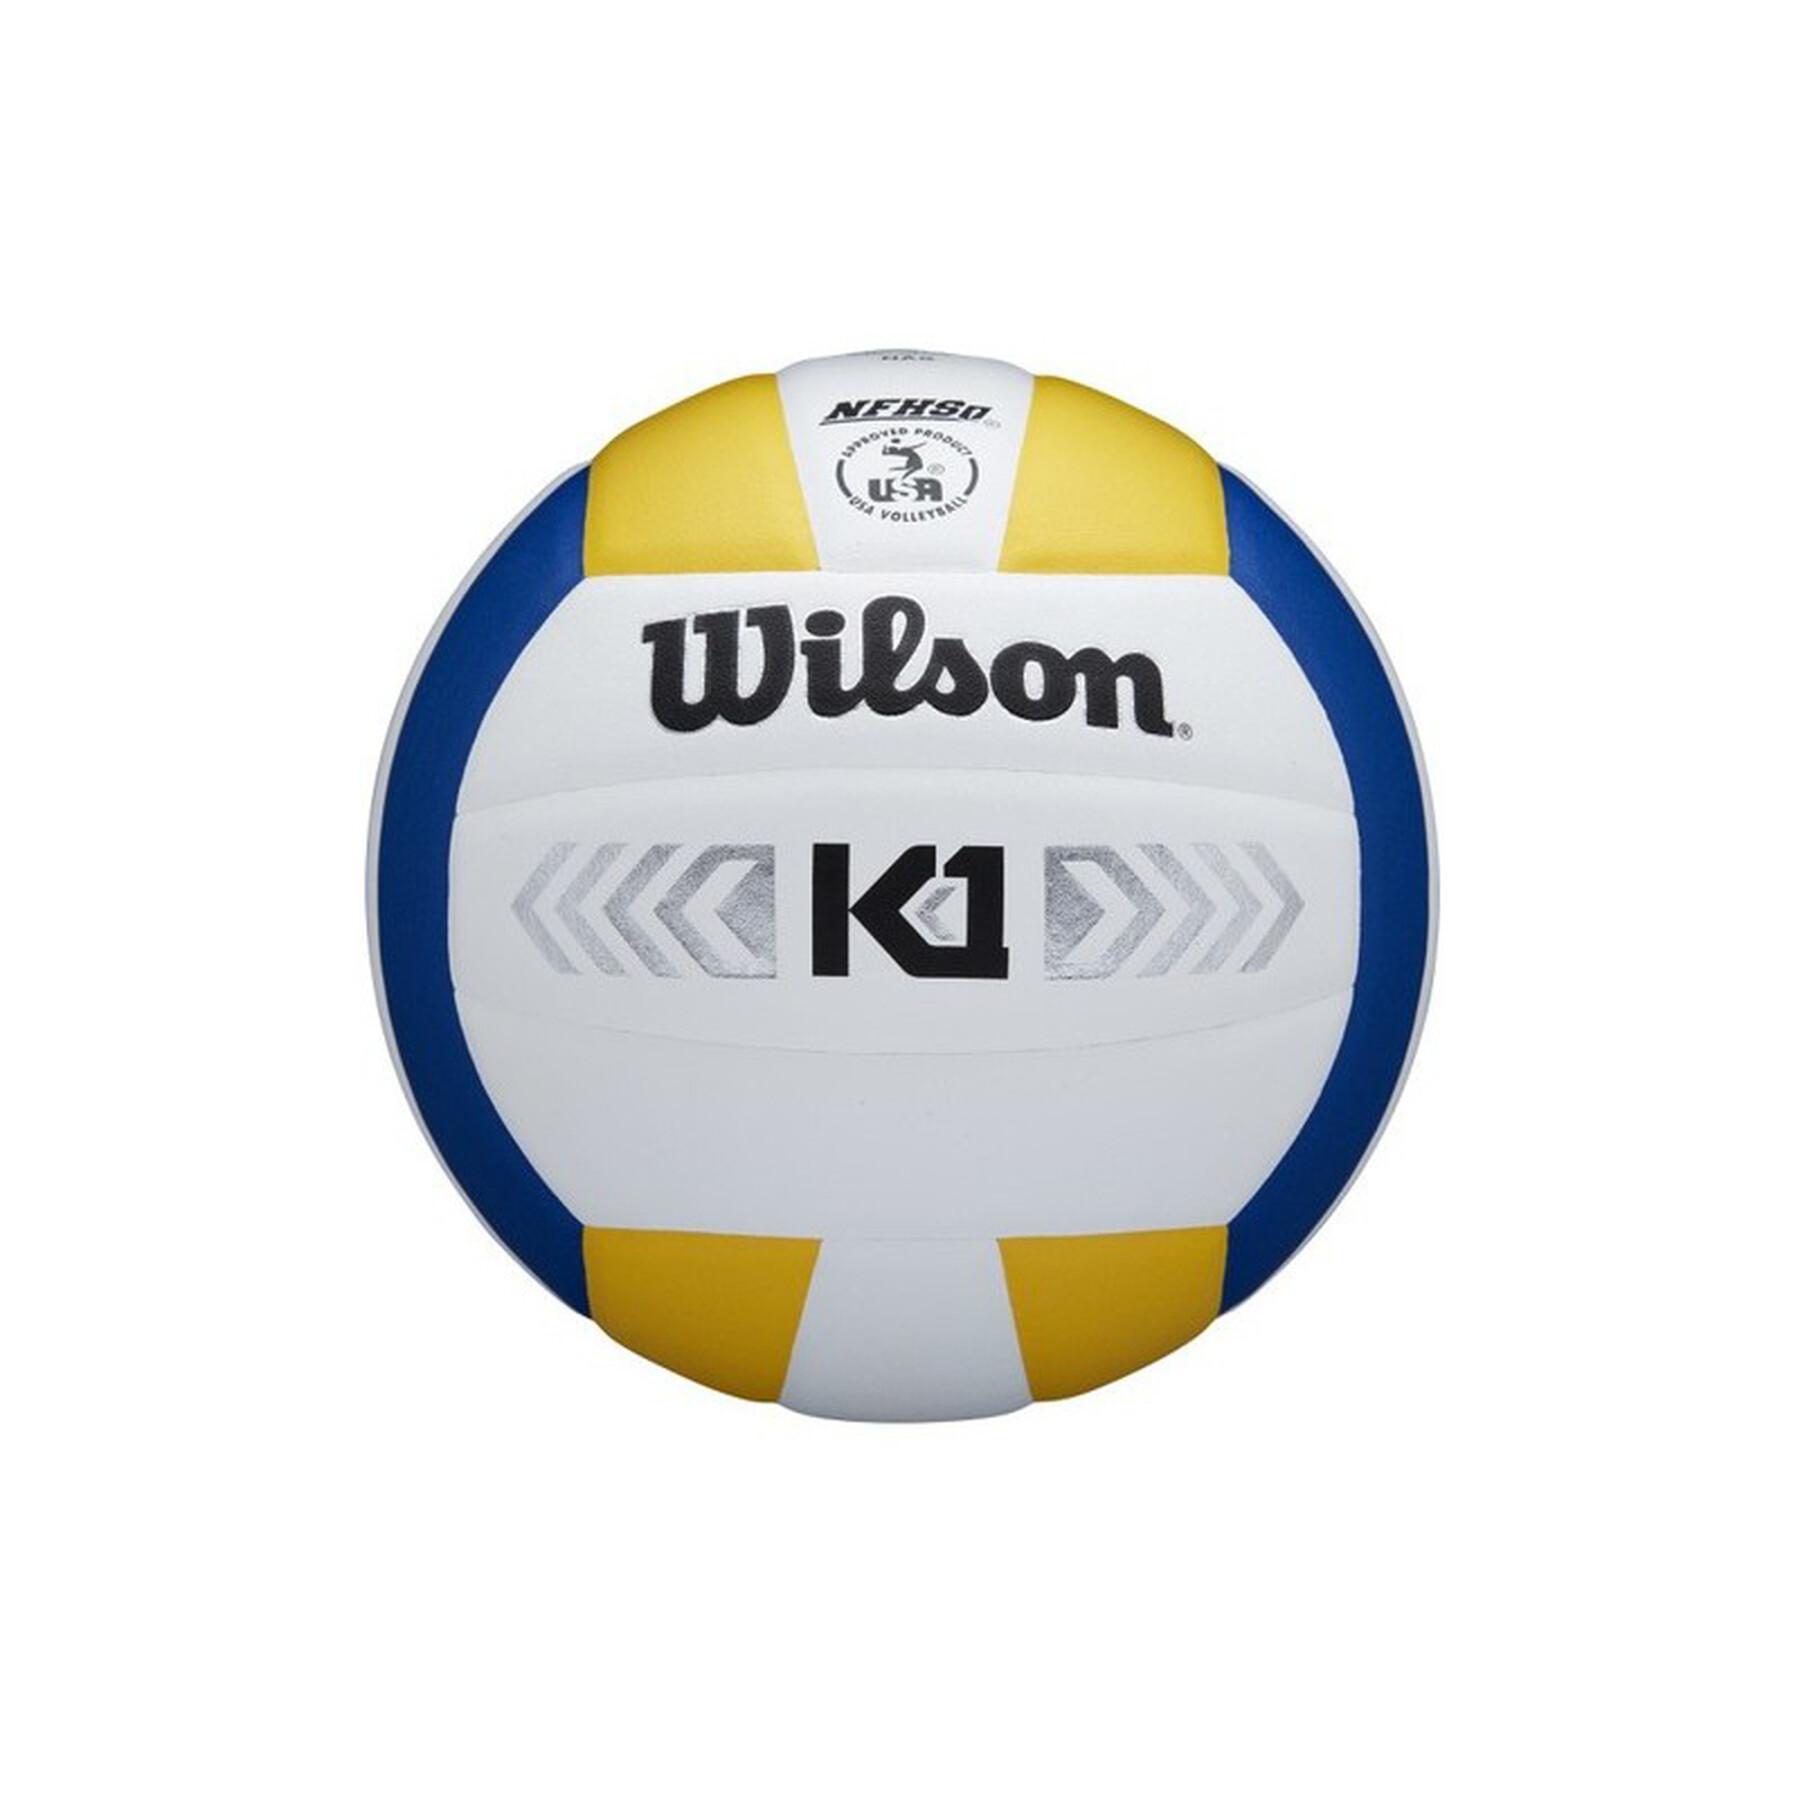 Volleyball ball Wilson K1 Silver